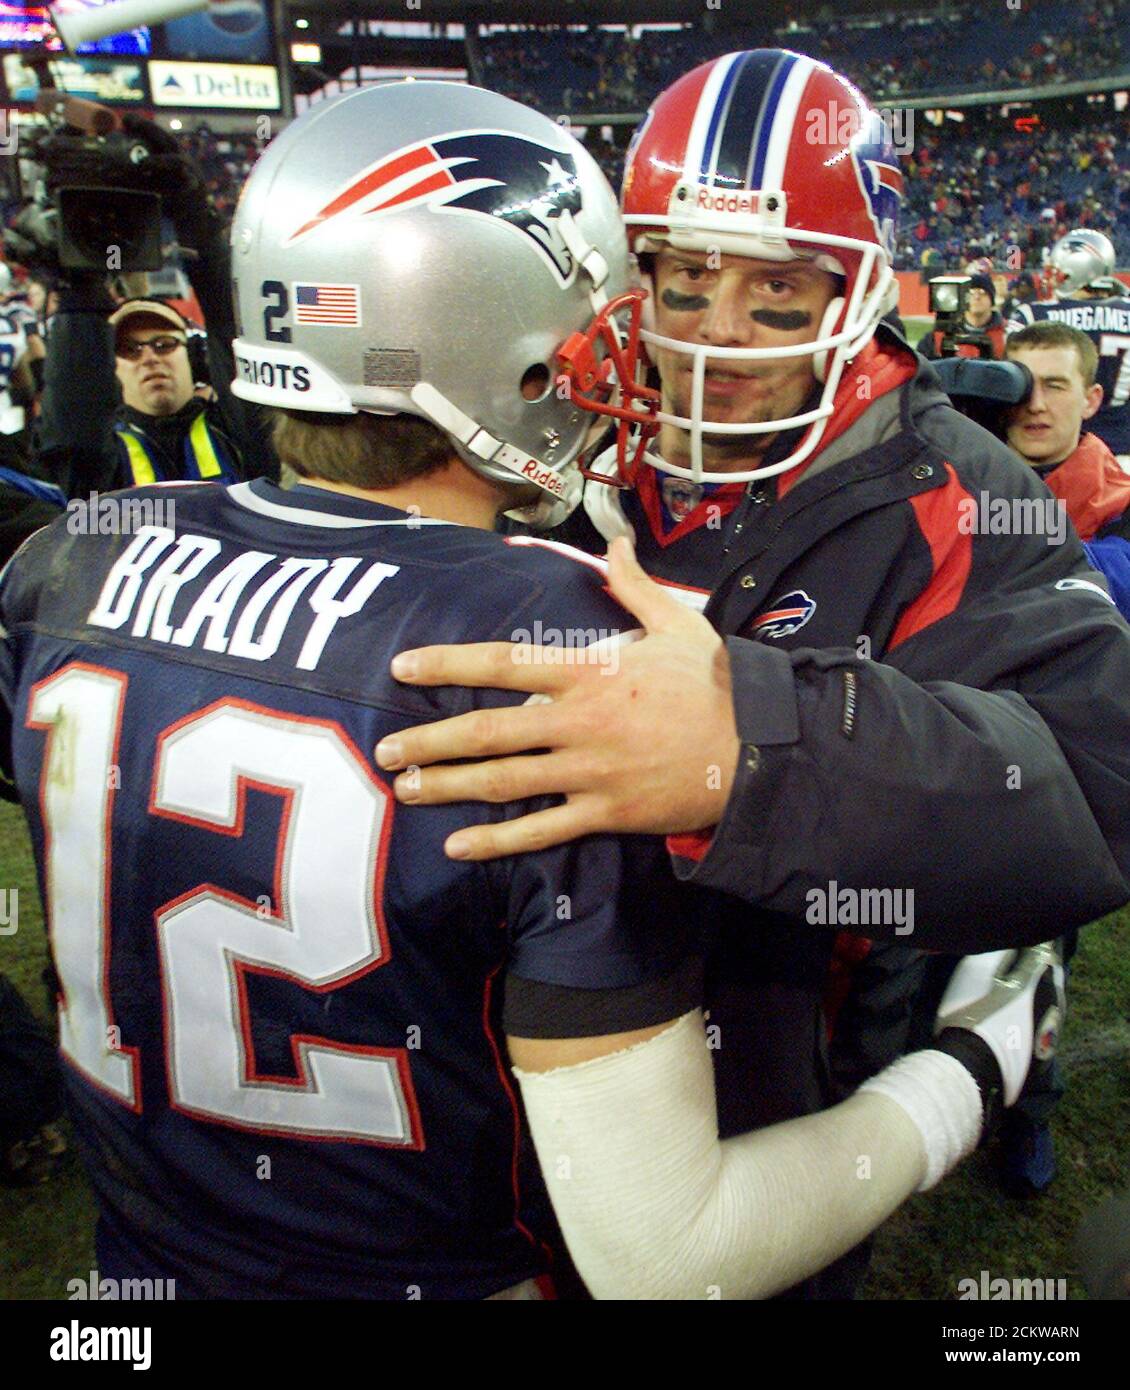 Buffalo Bills' quarterback Drew Bledsoe (R) congratulates New England  Patriots' quarterback Tom Brady (L) after the Patriots defeated the Bills  27-17 in their December 8, 2002 NFL game in Foxboro, Massachusetts. Bledsoe